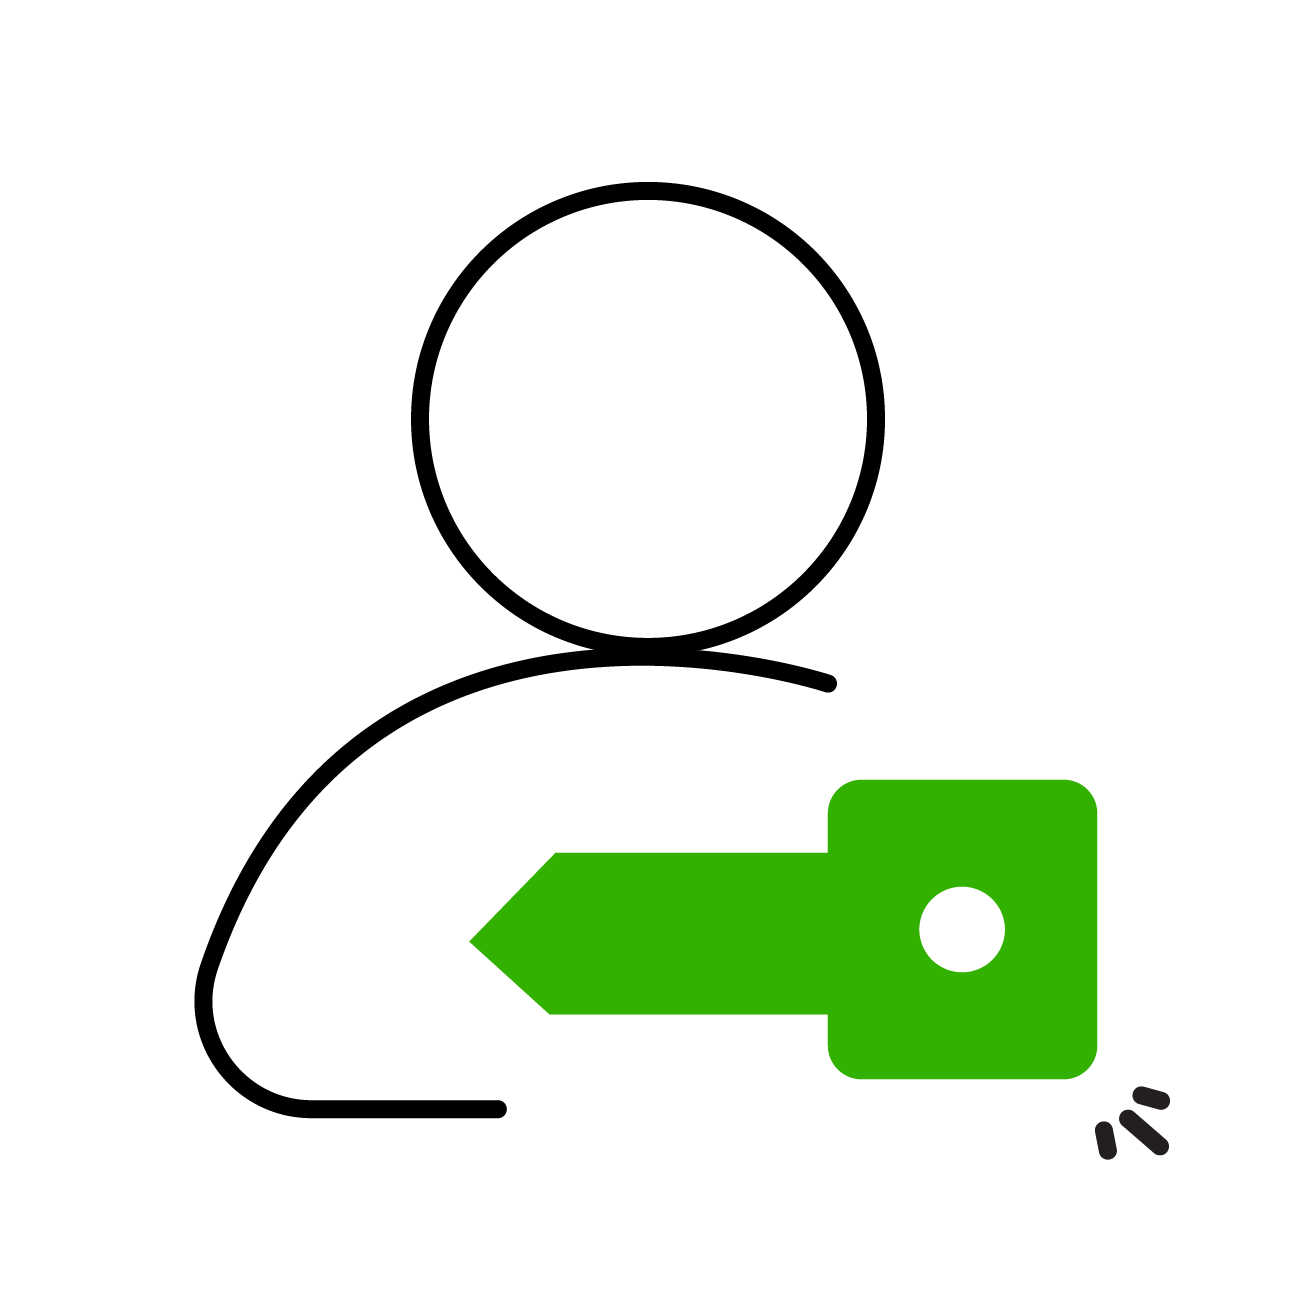 single login key icon